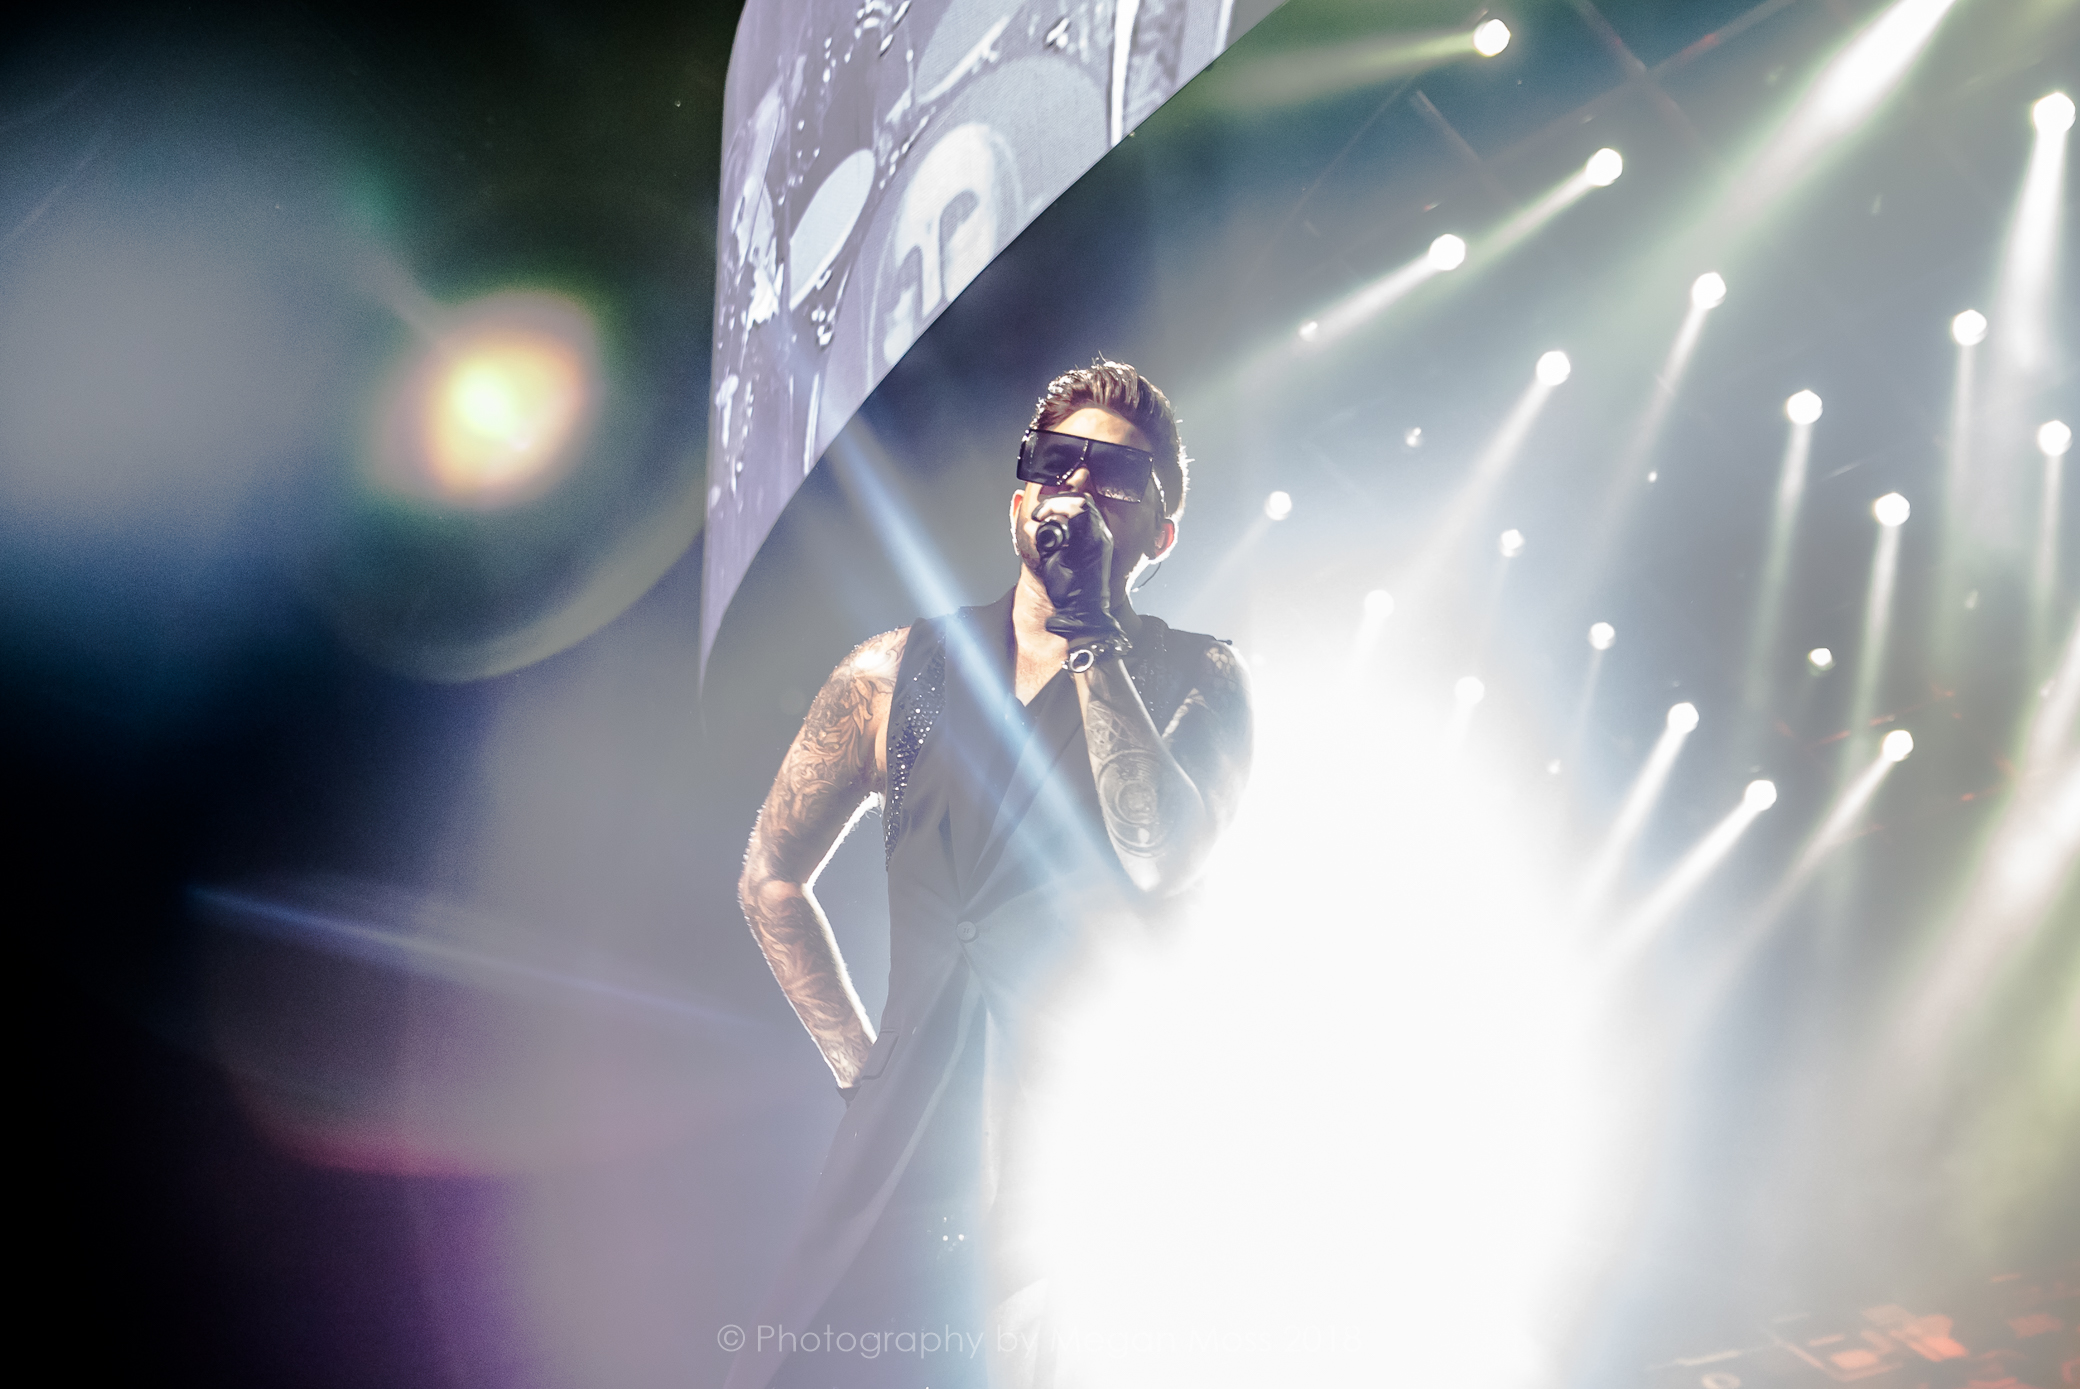 Queen+Adam Lambert-9390.jpg